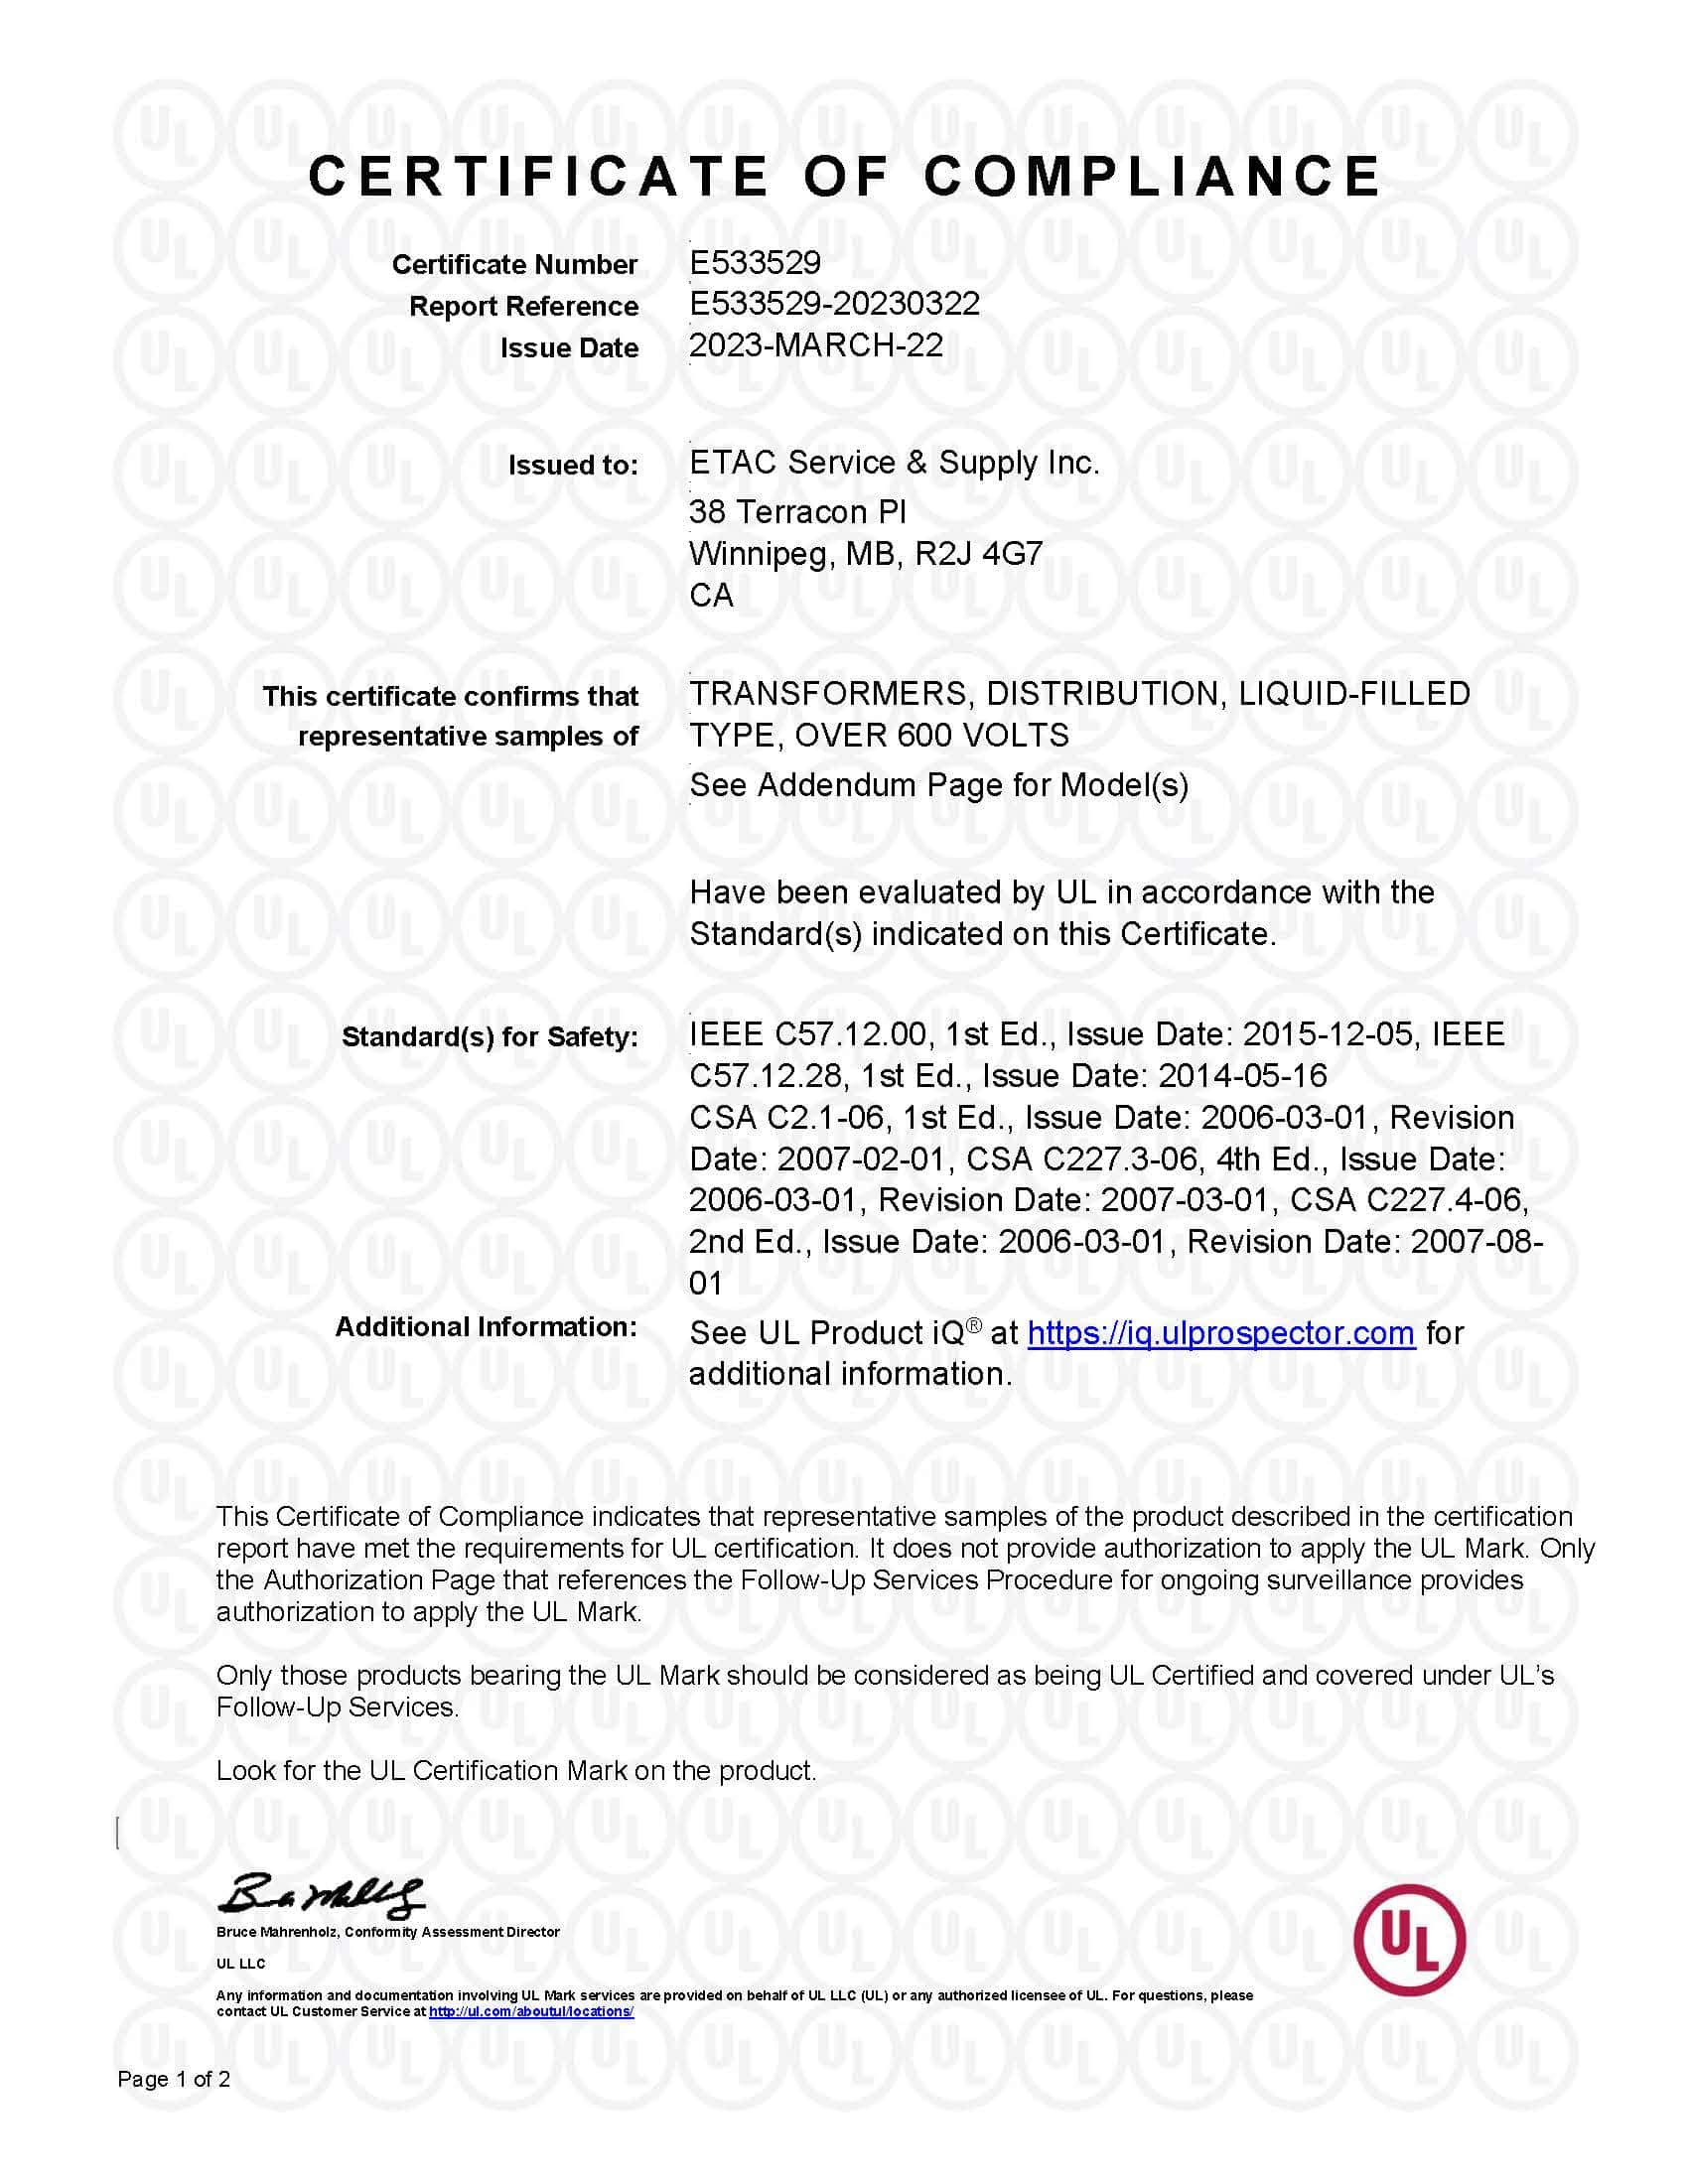 ETAC cULus Certificate